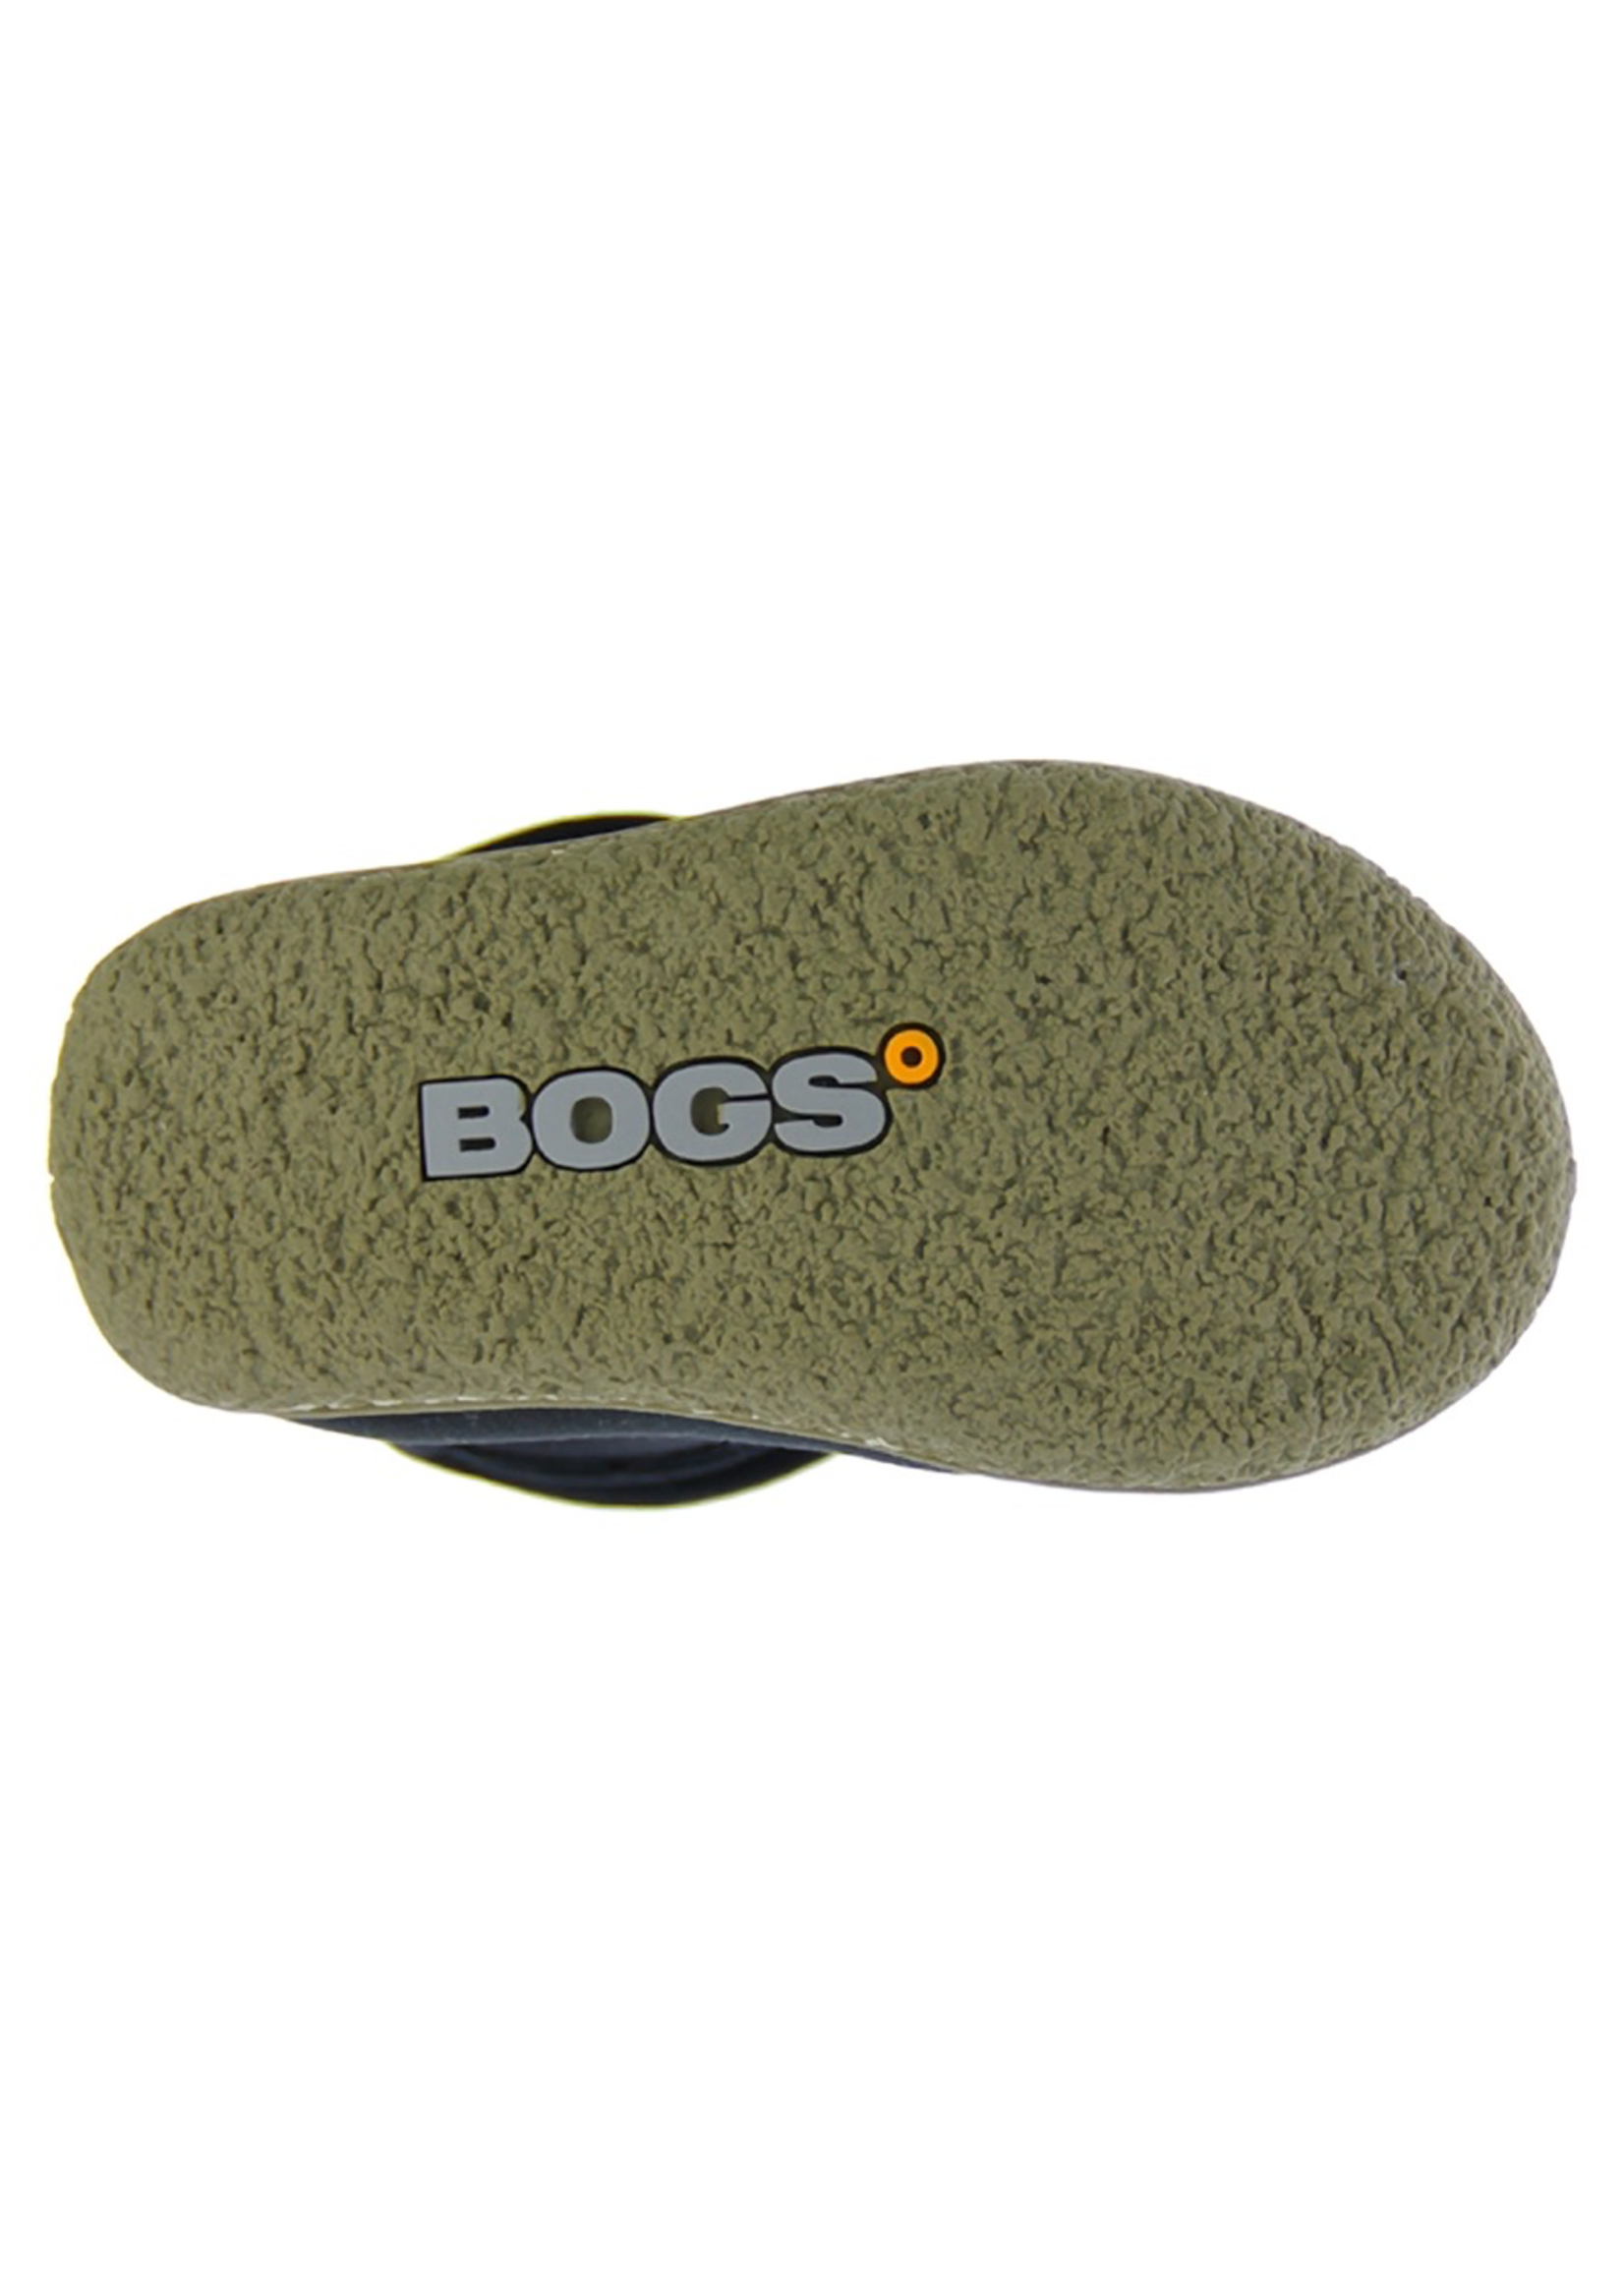 Bogs Bogs, Baby Bogs Solid Waterproof Boots